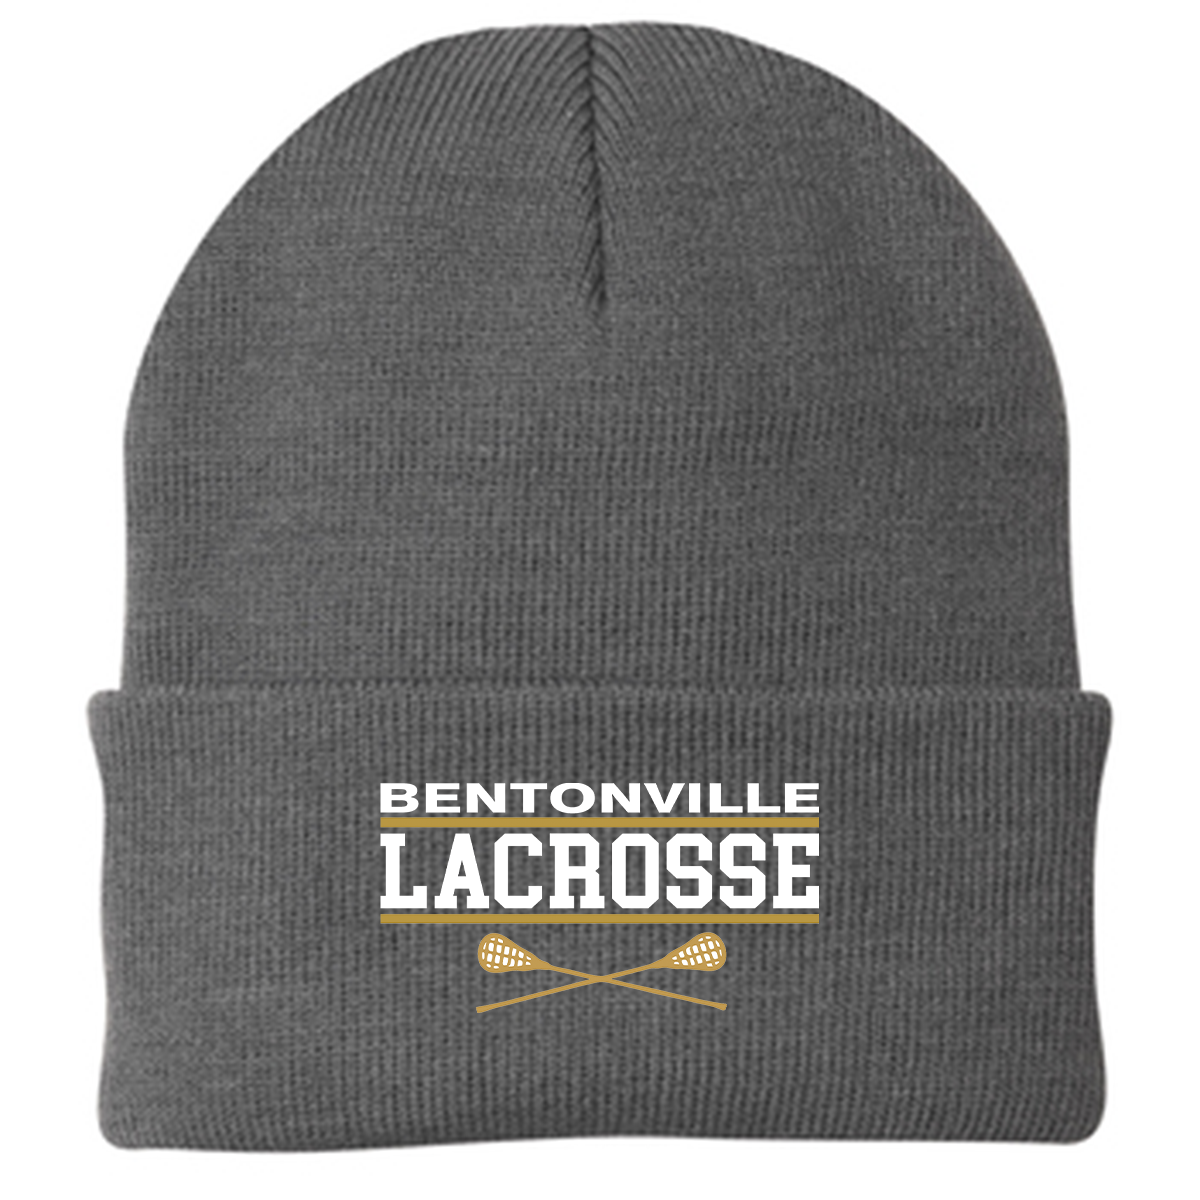 Bentonville Lacrosse Knit Beanie